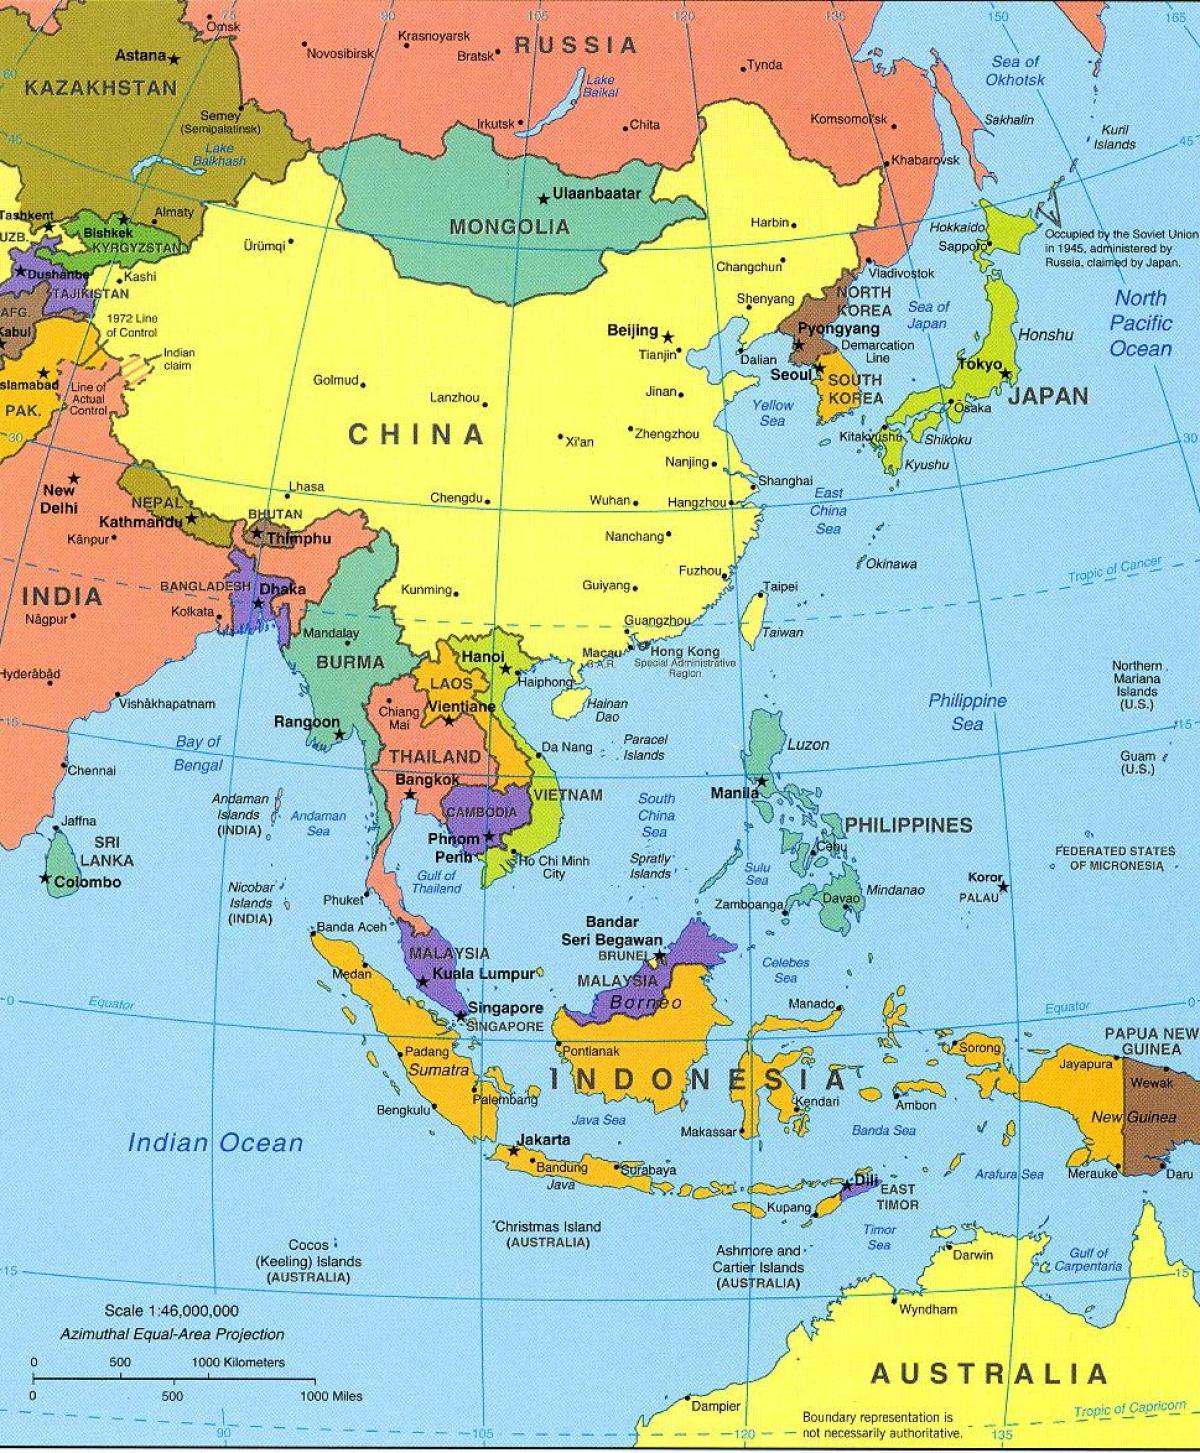 Taipei placering på verdenskortet